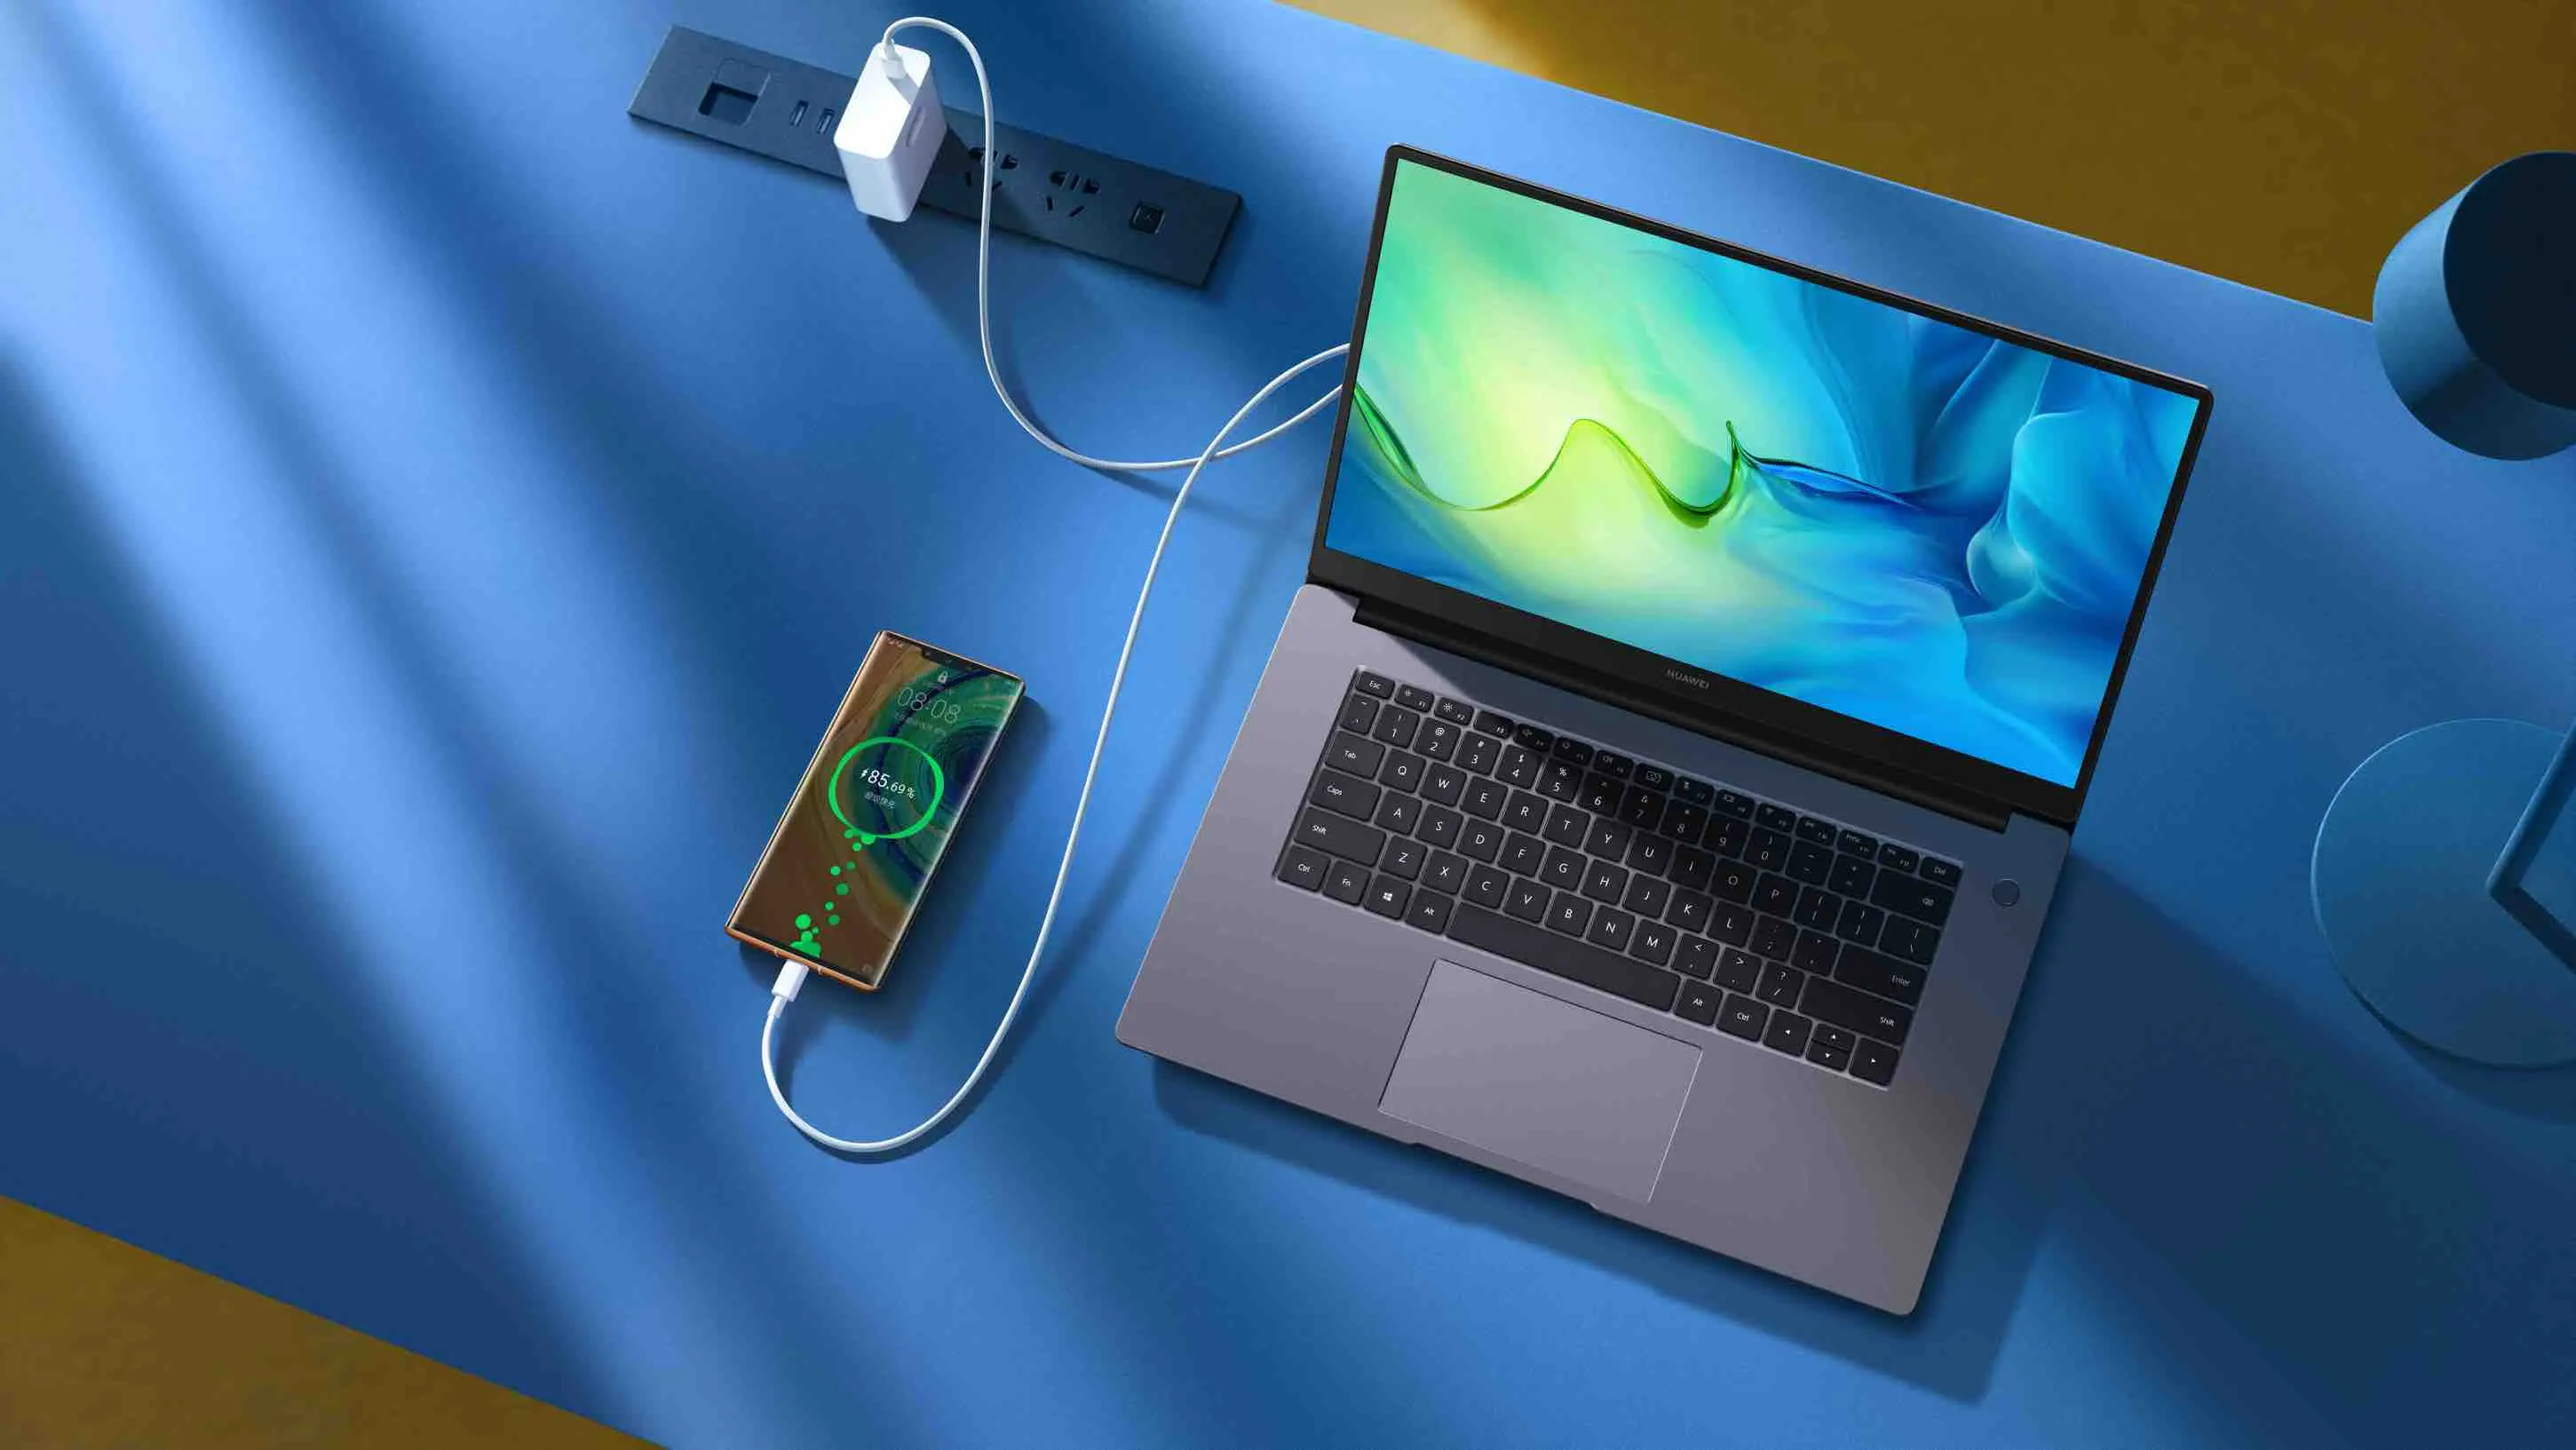 Preiswerte Huawei MateBook D Laptops in Kürze erhältlich